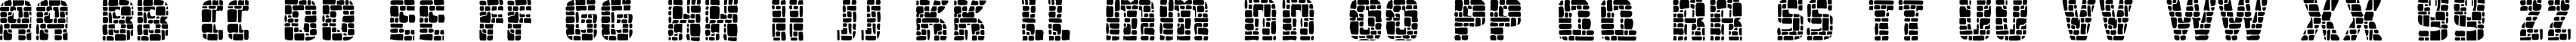 Пример написания английского алфавита шрифтом Dungeon Blocks Filled